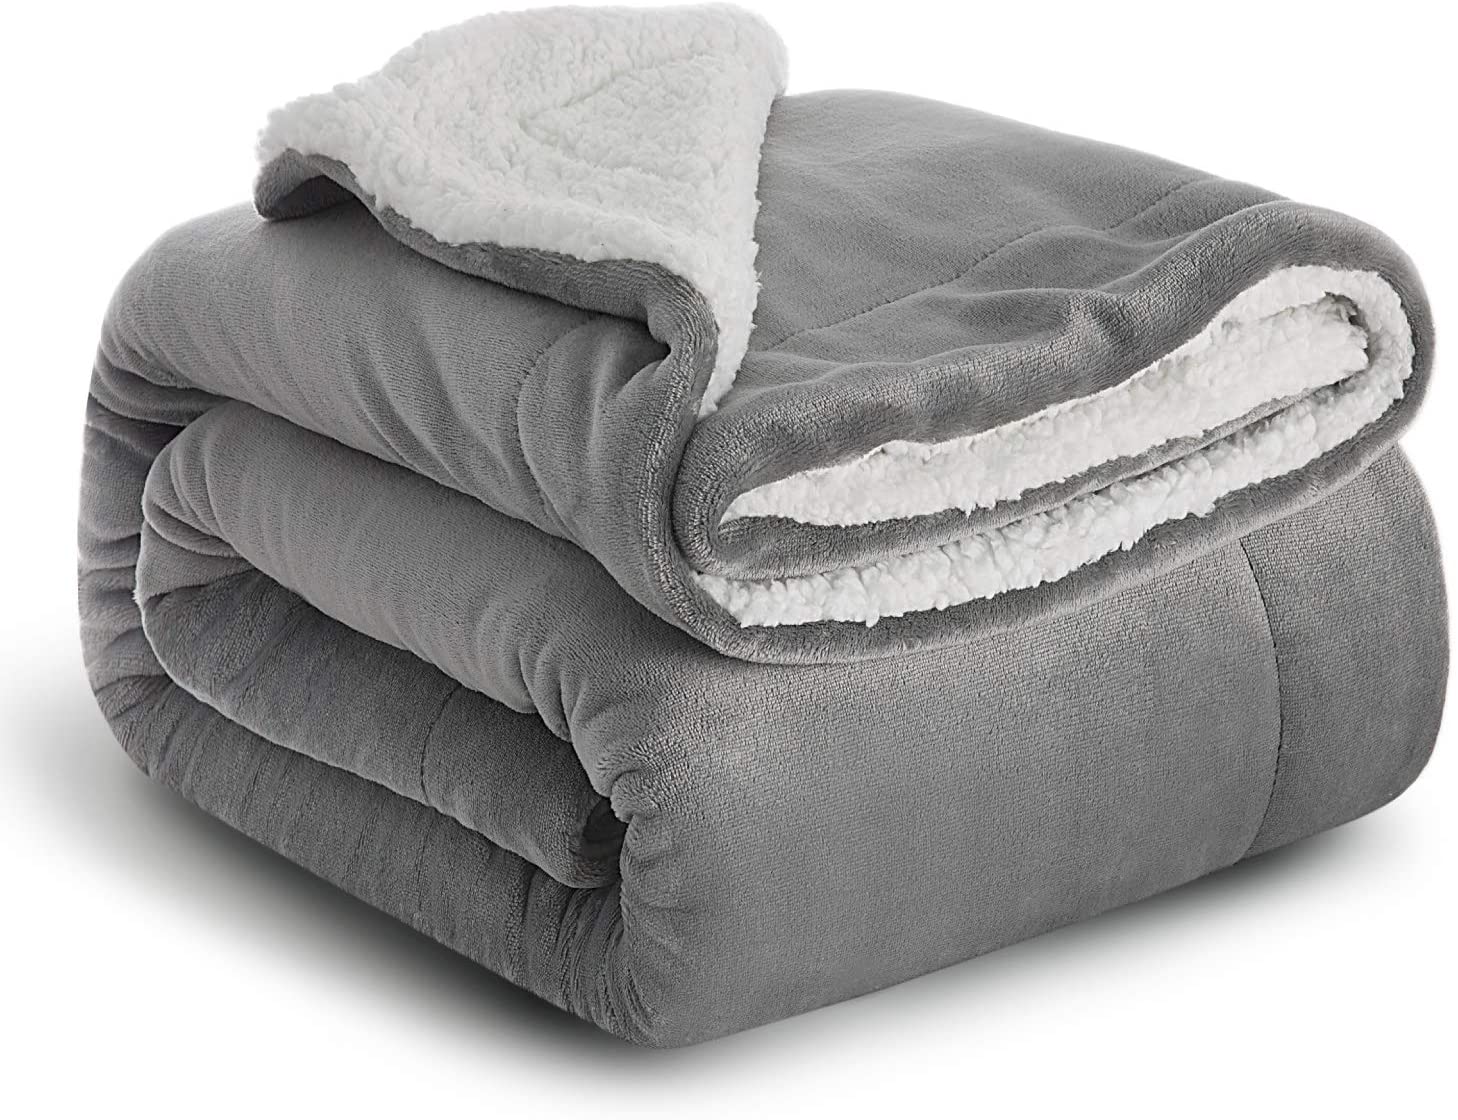 Bedsure Fuzzy Textured Reversible Sherpa Throw Blanket 